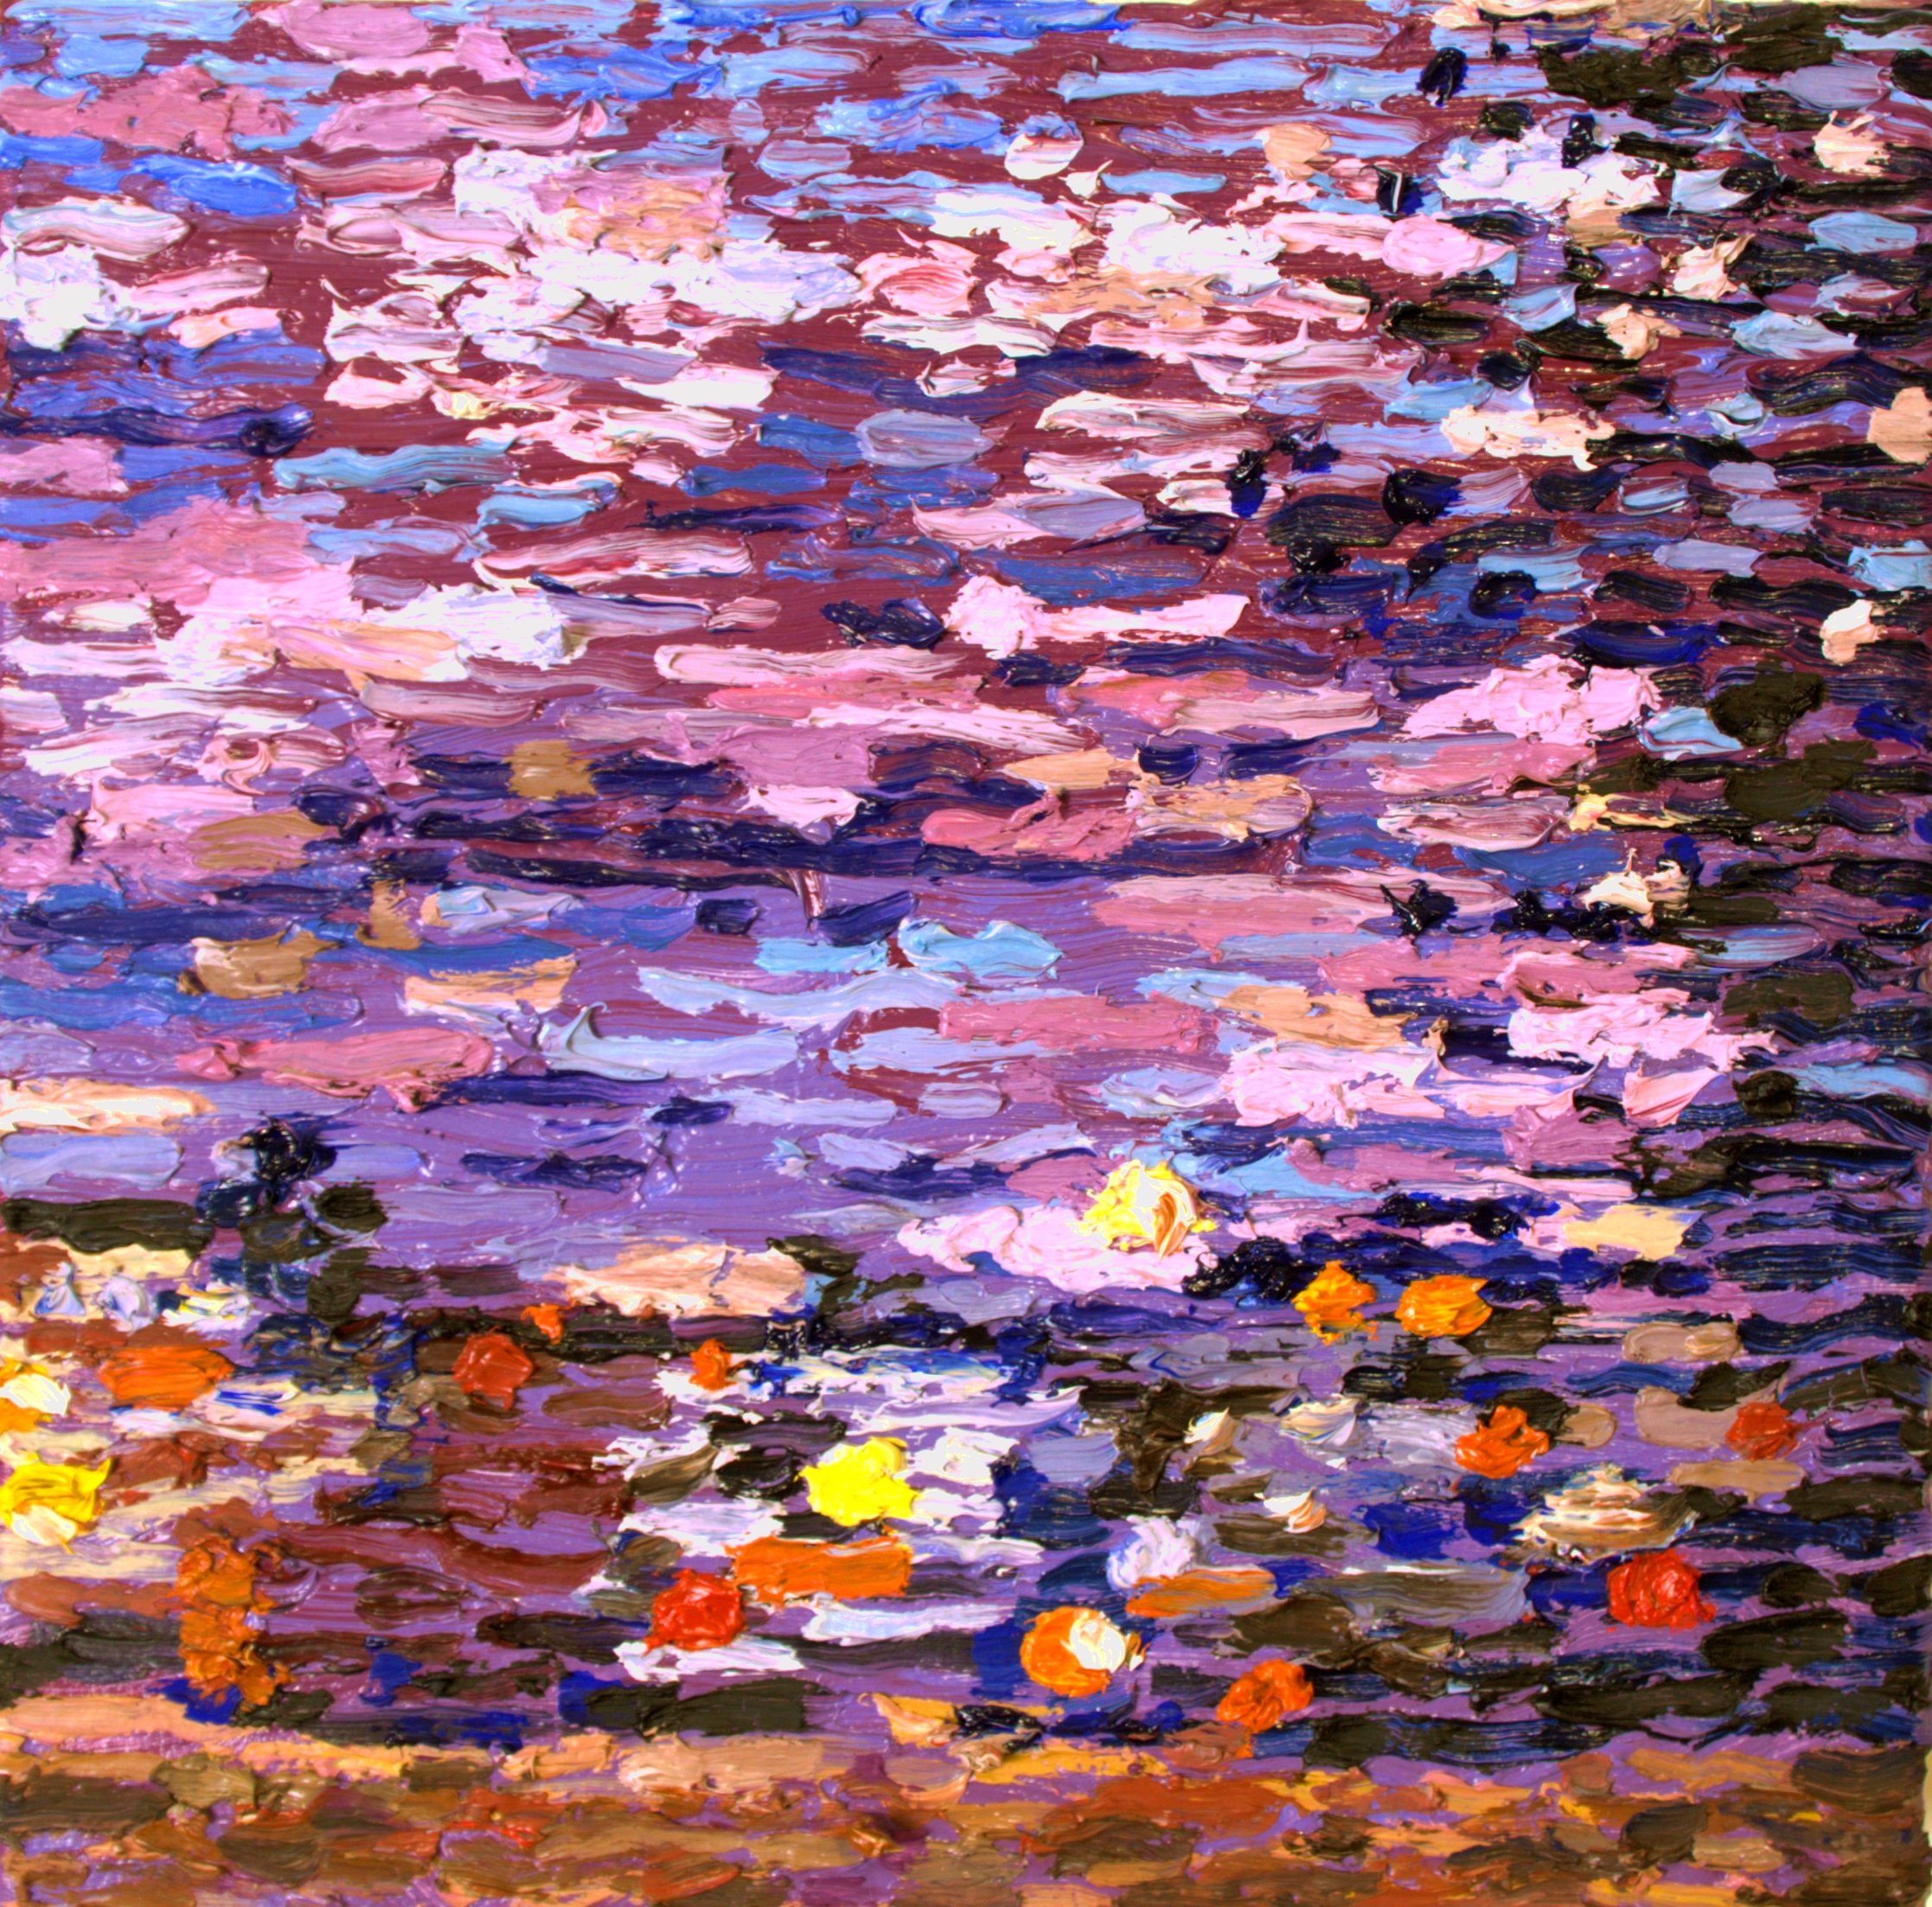  Purple Haze (2018)  8”x8”x1.5”  oil on canvas  